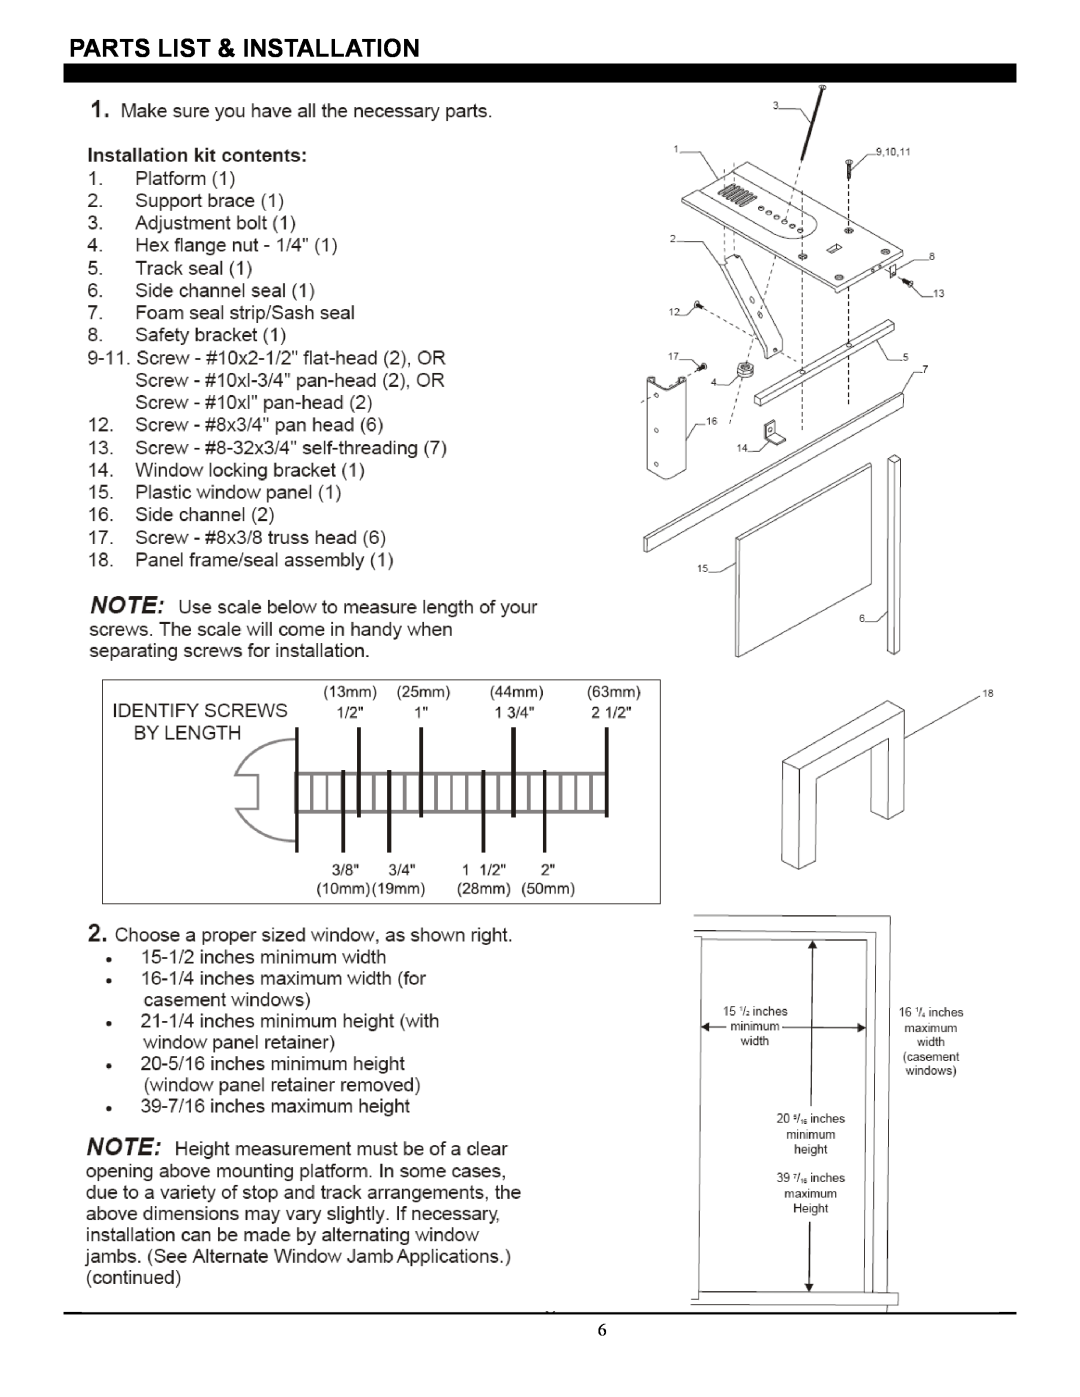 Soleus Air SG-CAC-08ESE manual Parts List & Installation 